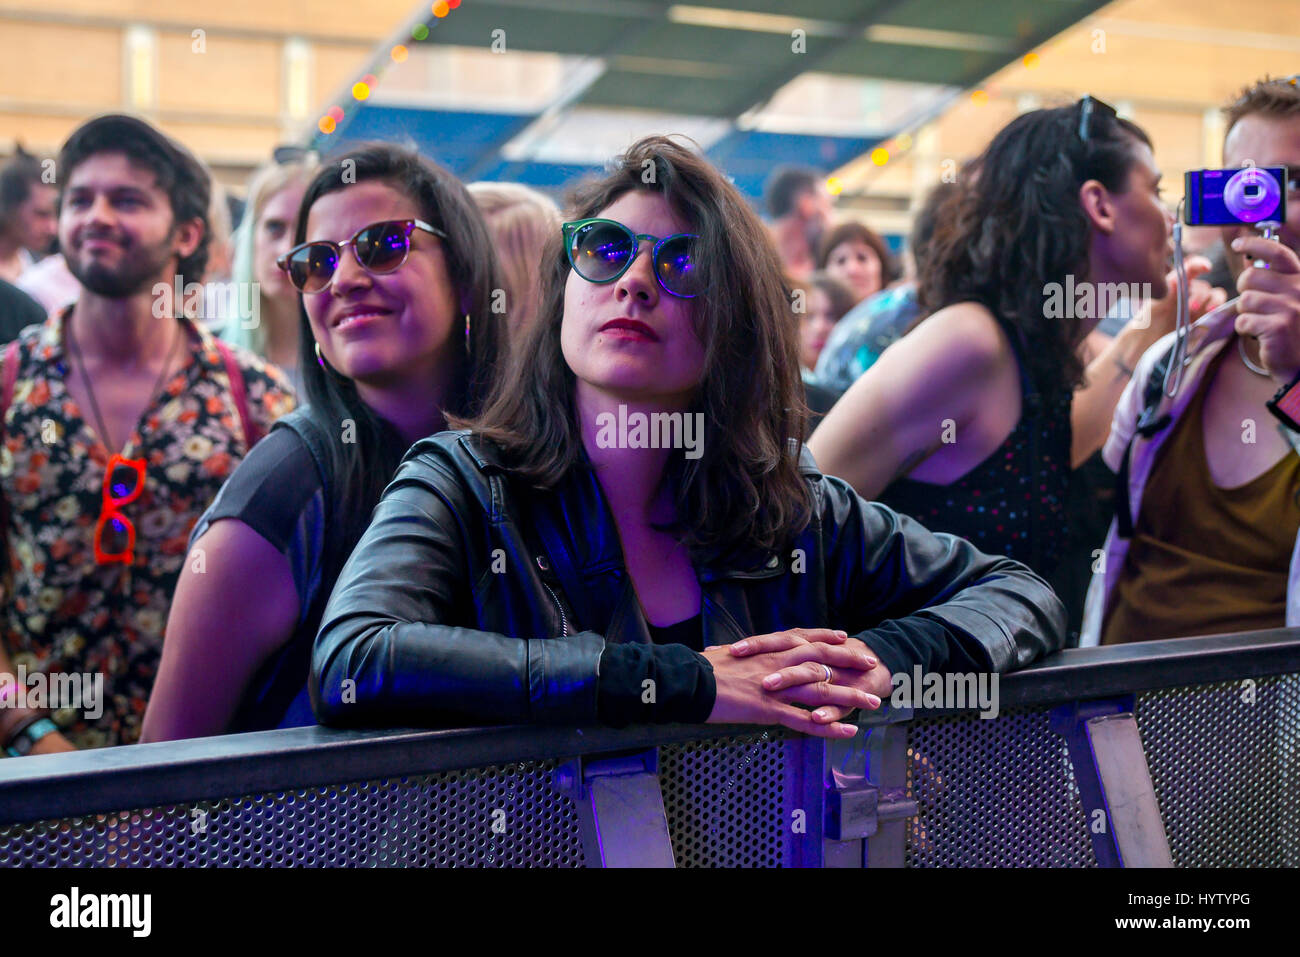 BARCELONA - JUN 17: The crowd in a concert at Sonar Festival on June 17, 2016 in Barcelona, Spain. Stock Photo